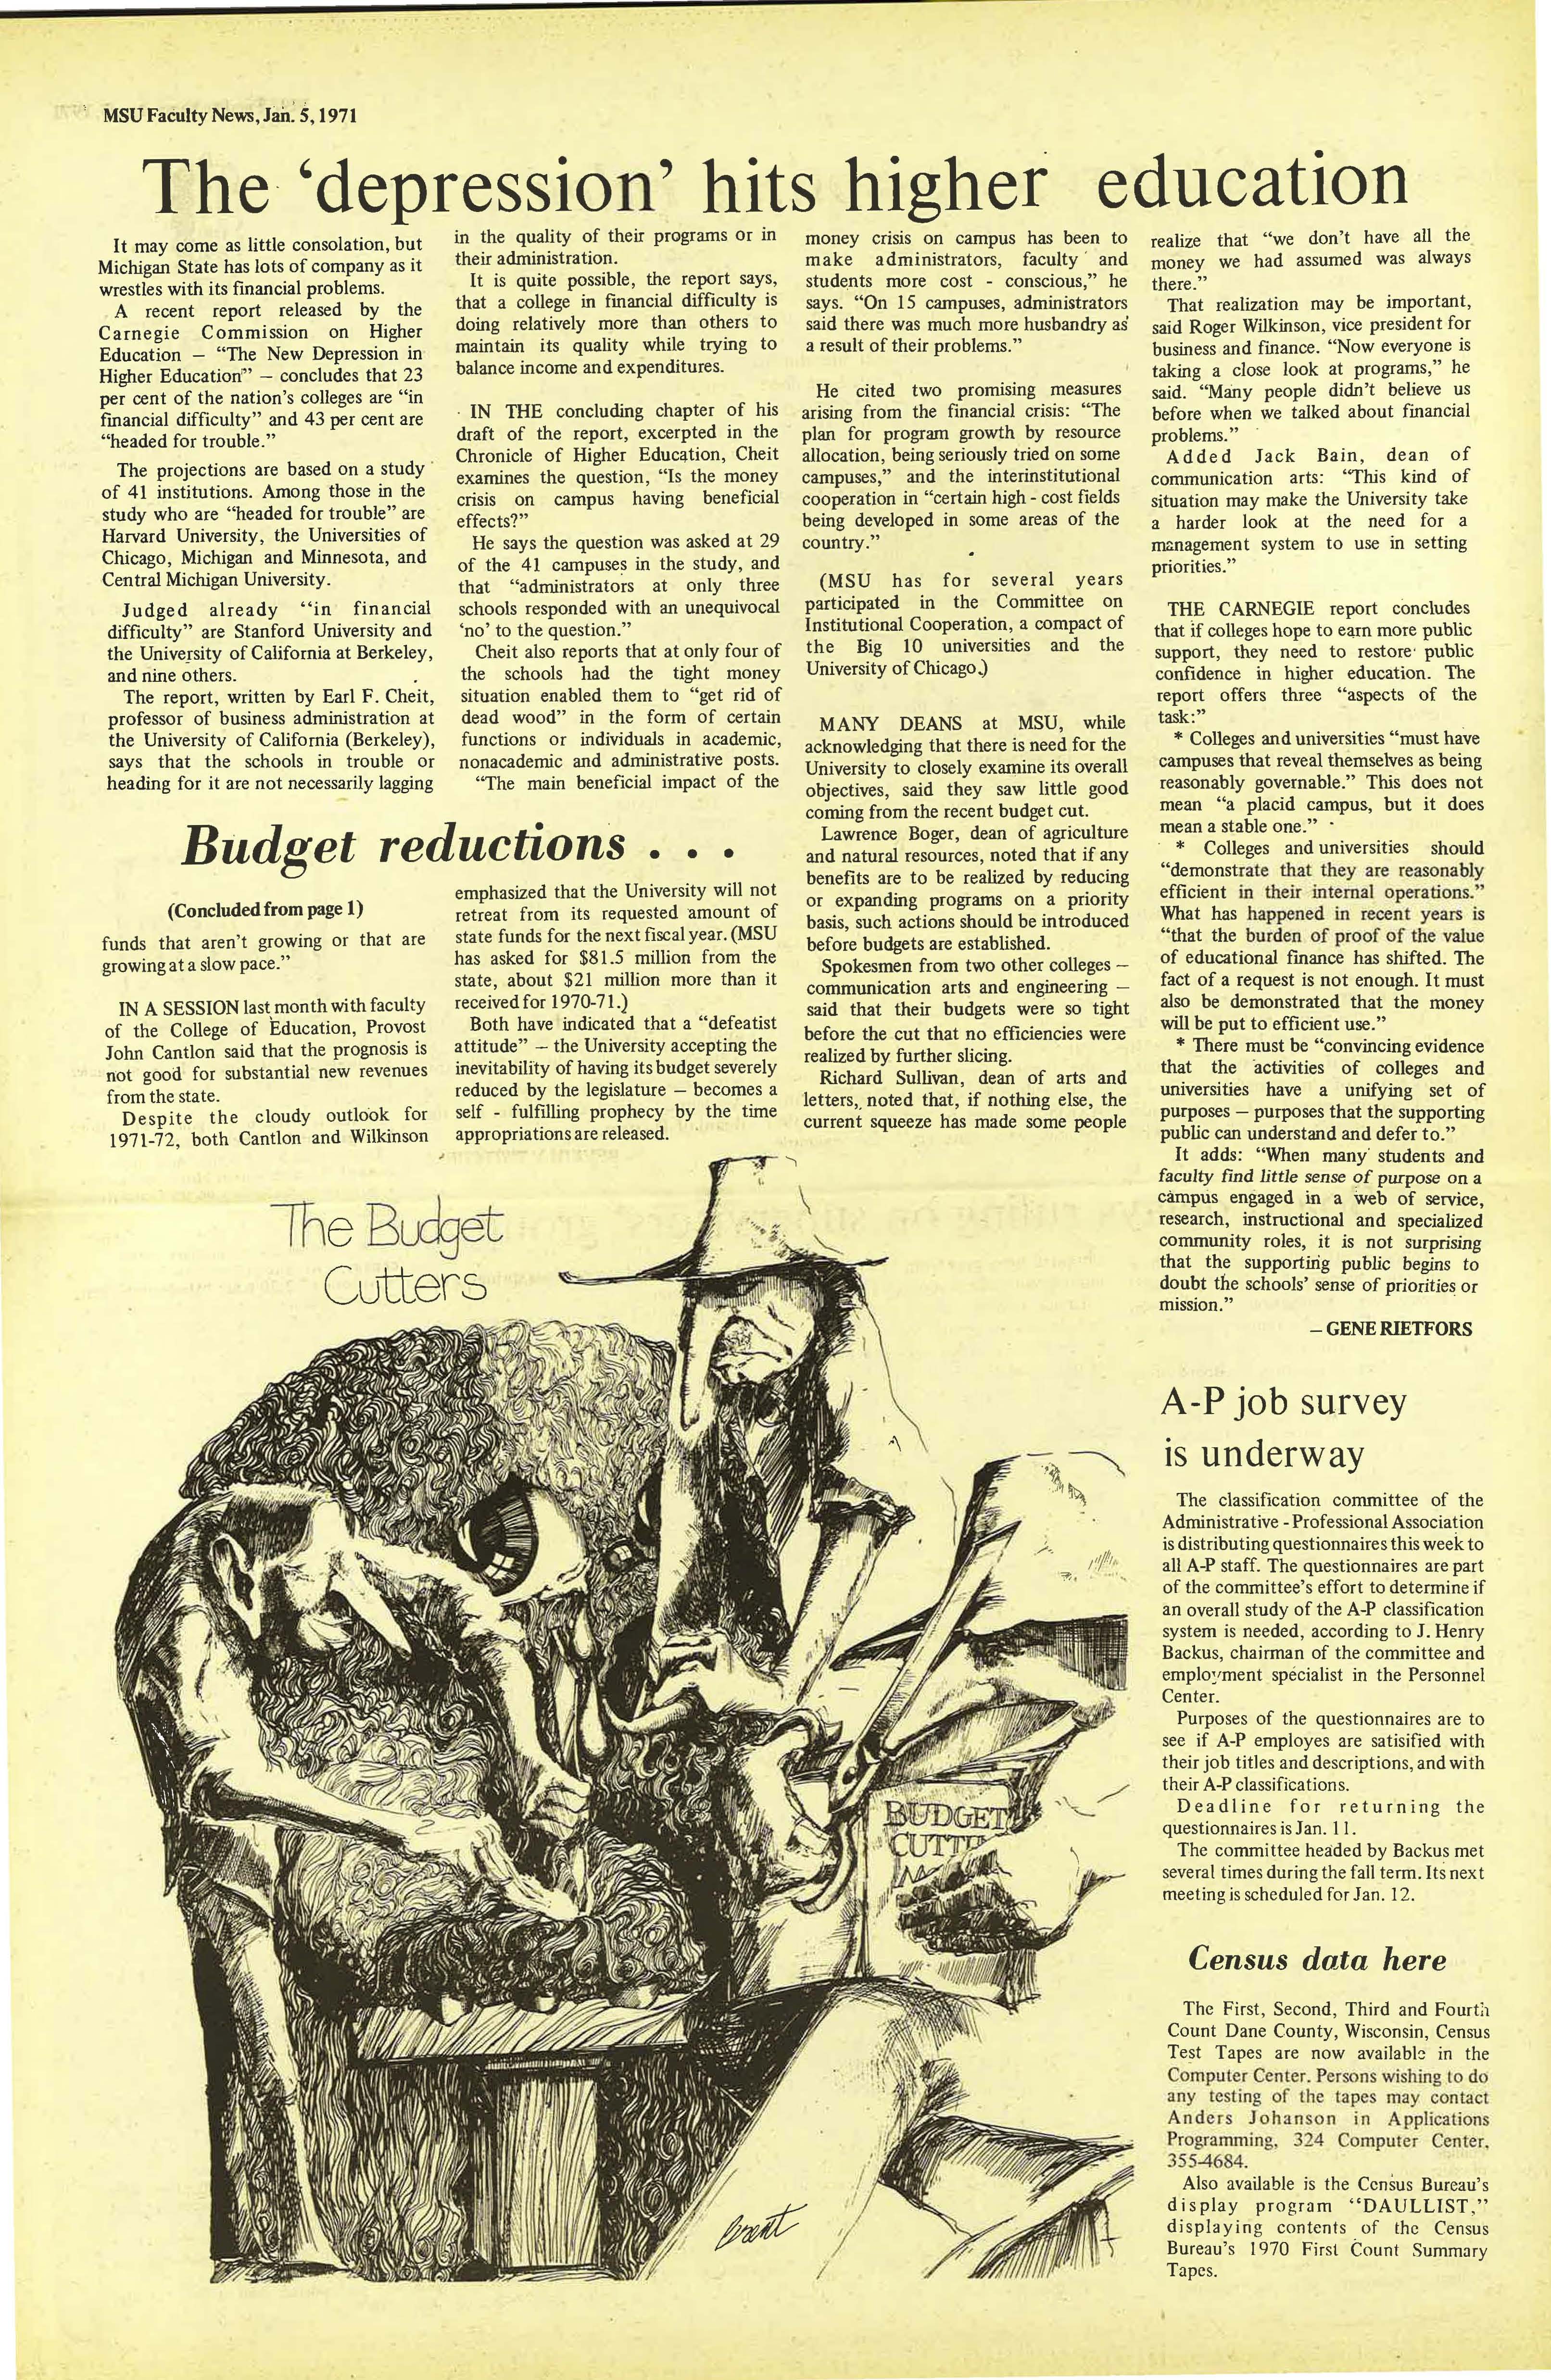 MSU News Bulletin, vol. 2, No. 31, July 1, 1971